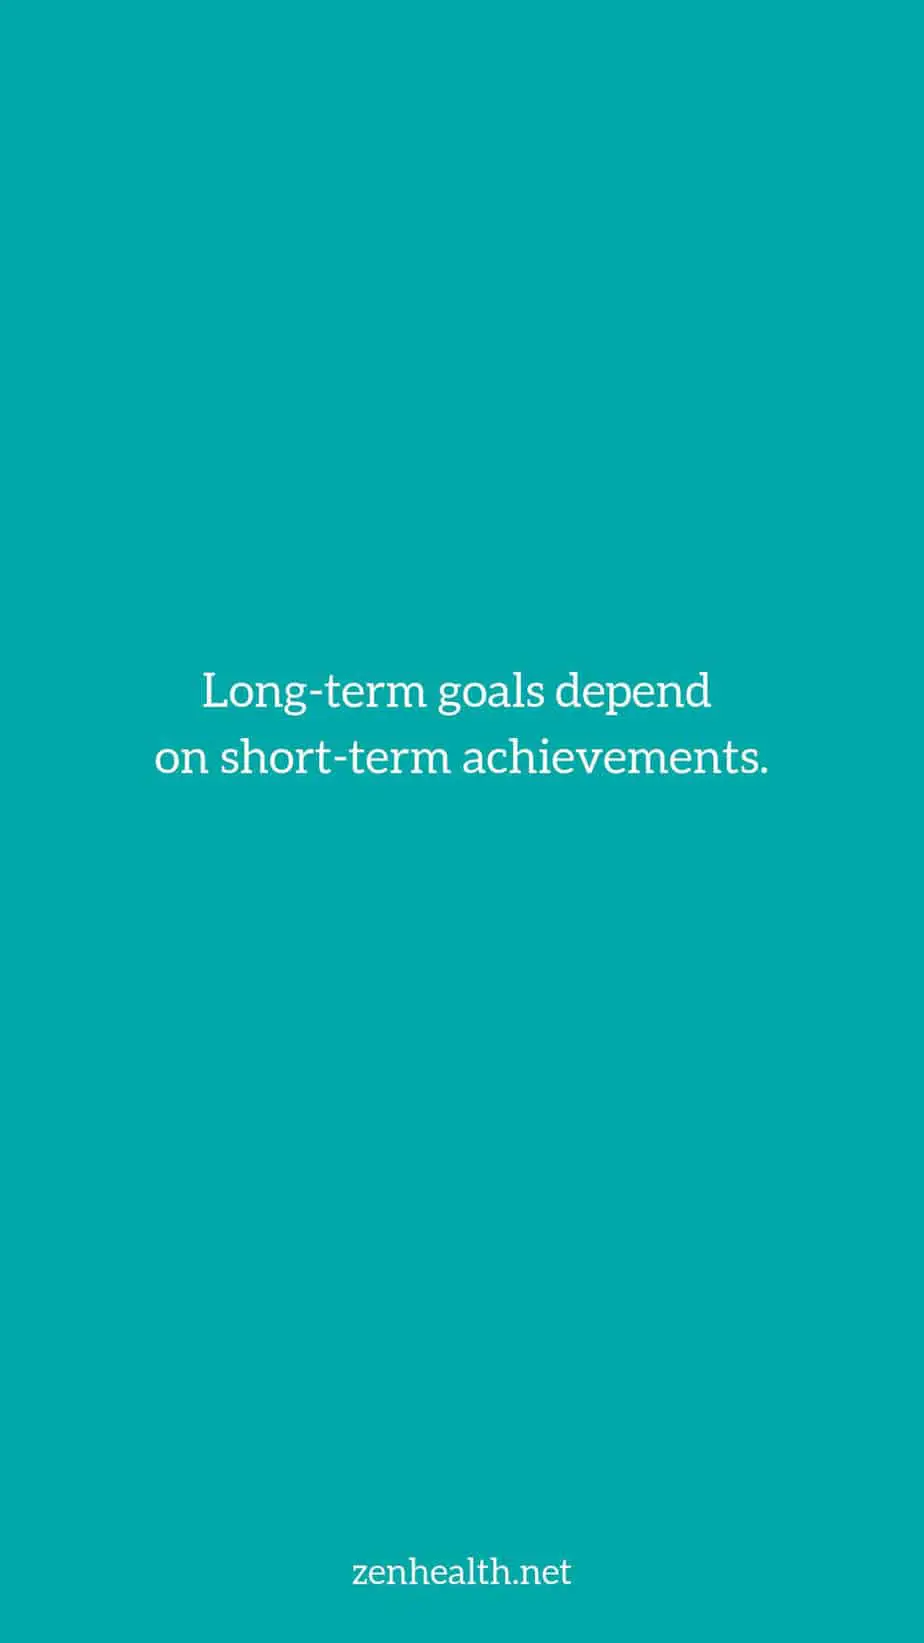 Long-term goals depend on short-term achievements.